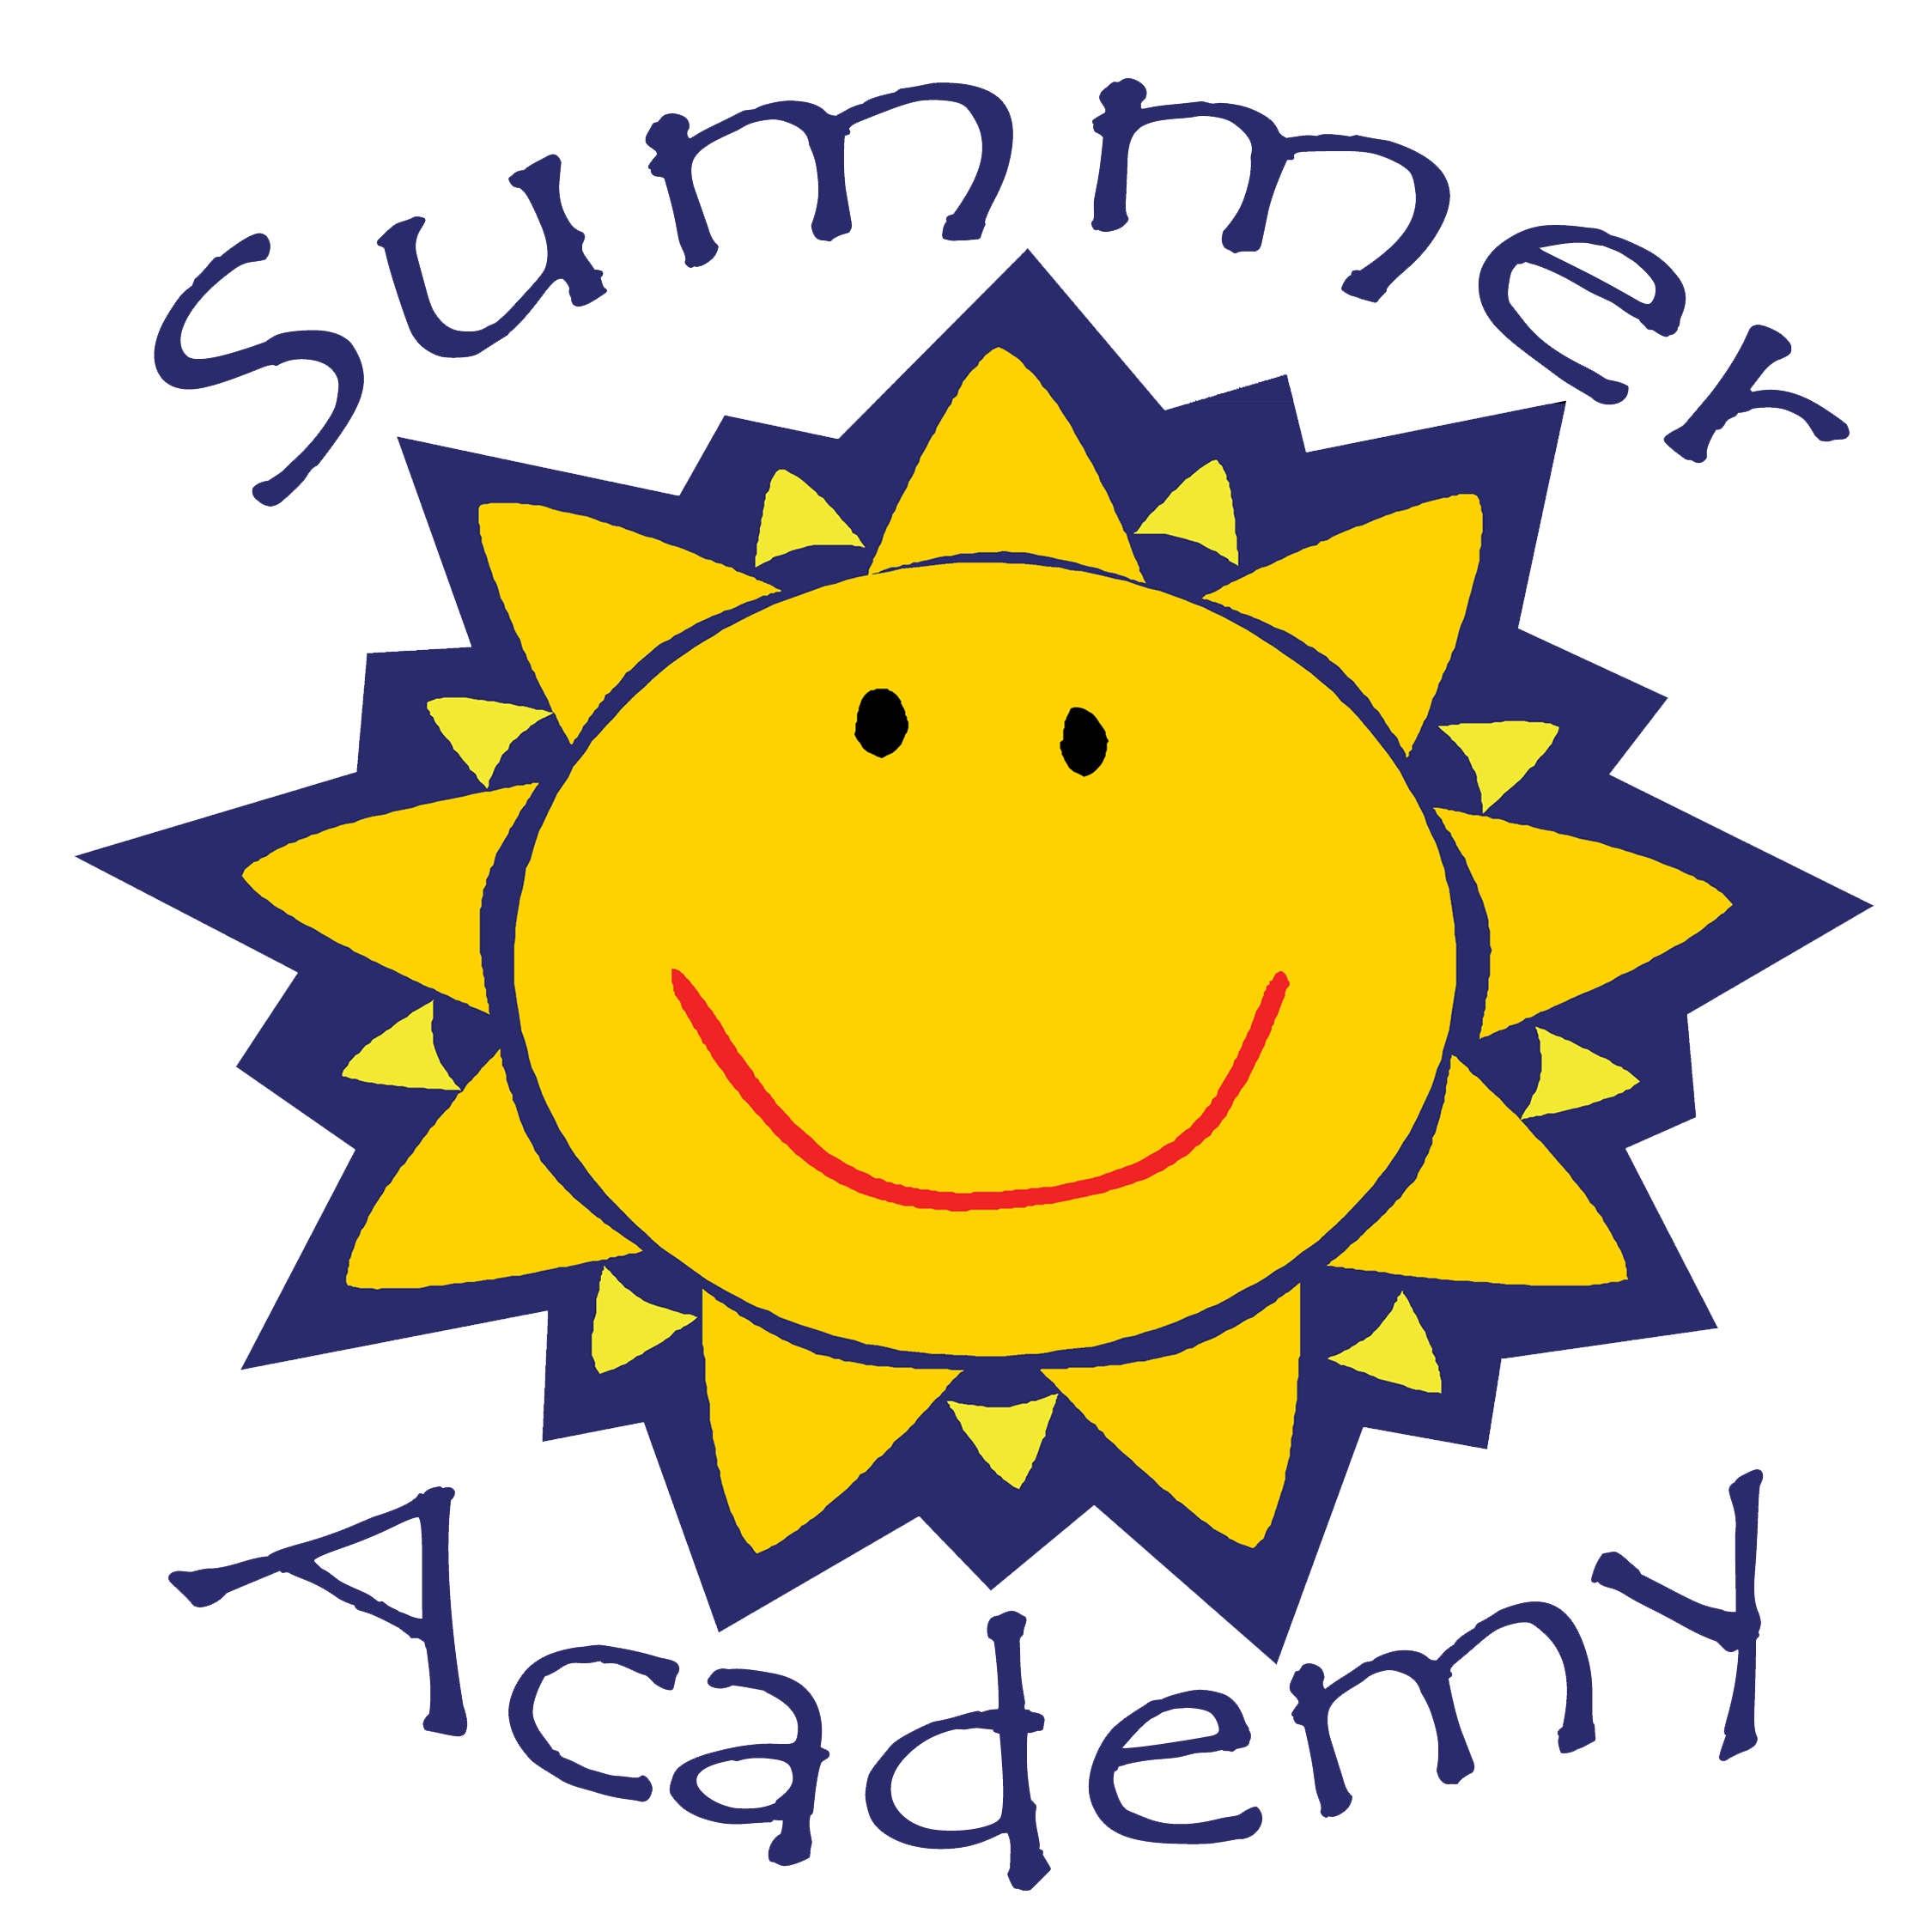 Summer Academy begins May 31!